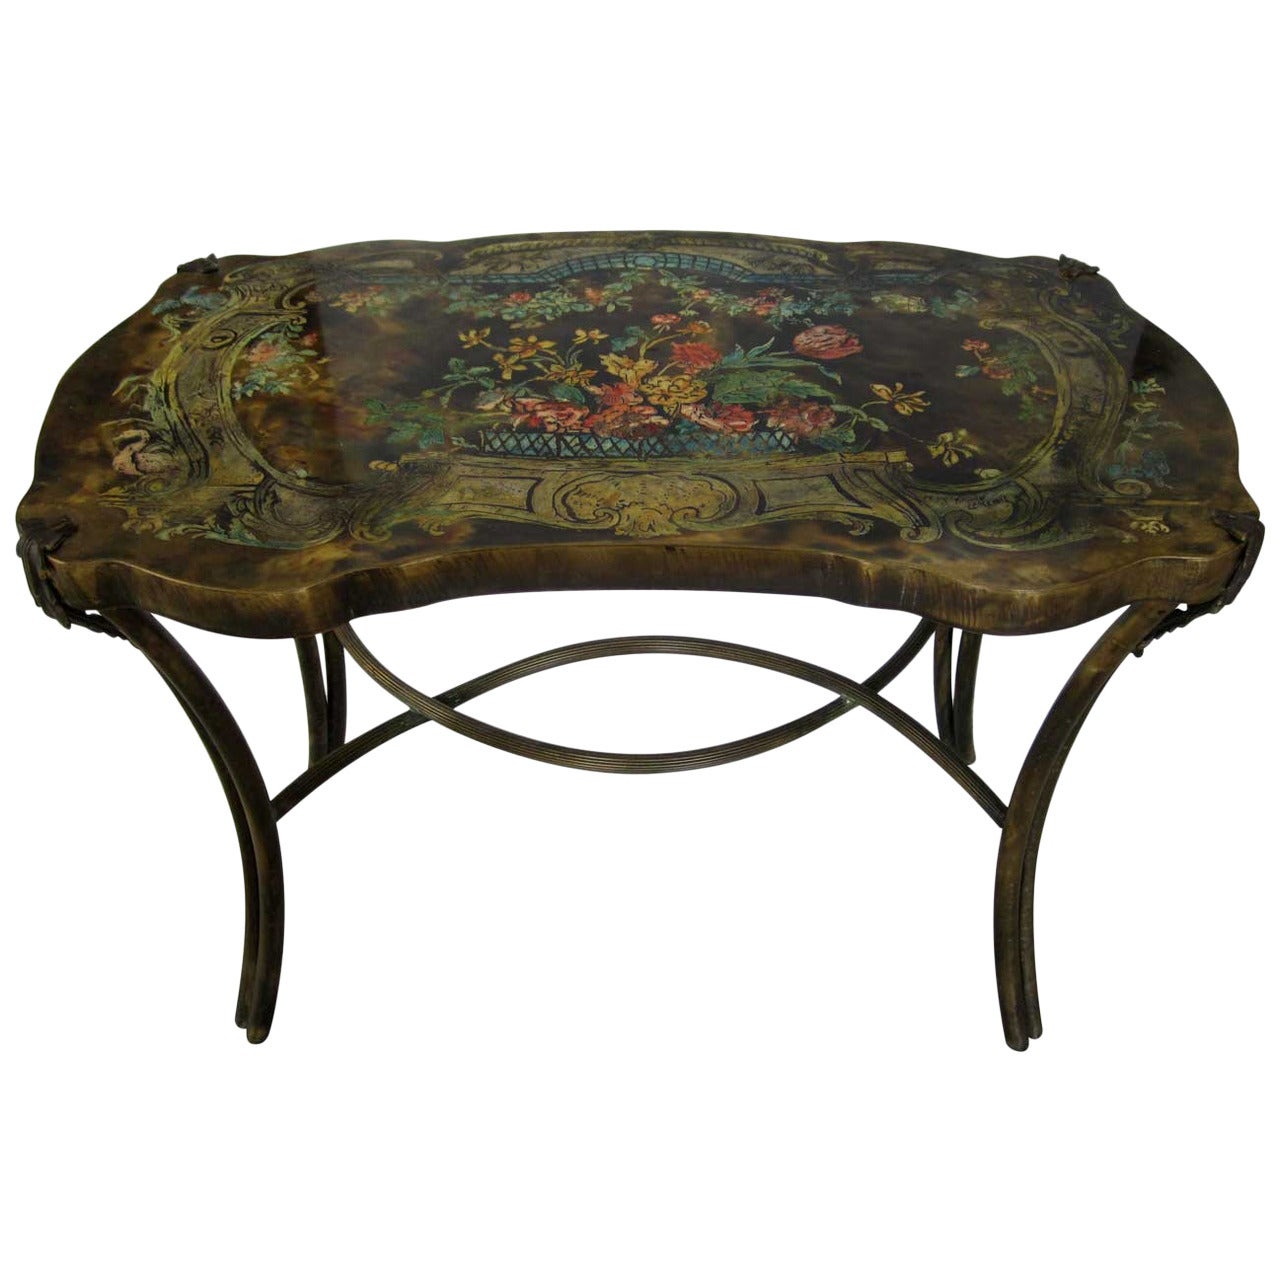 Signed Laverne "Pompadour Floral" Table For Sale